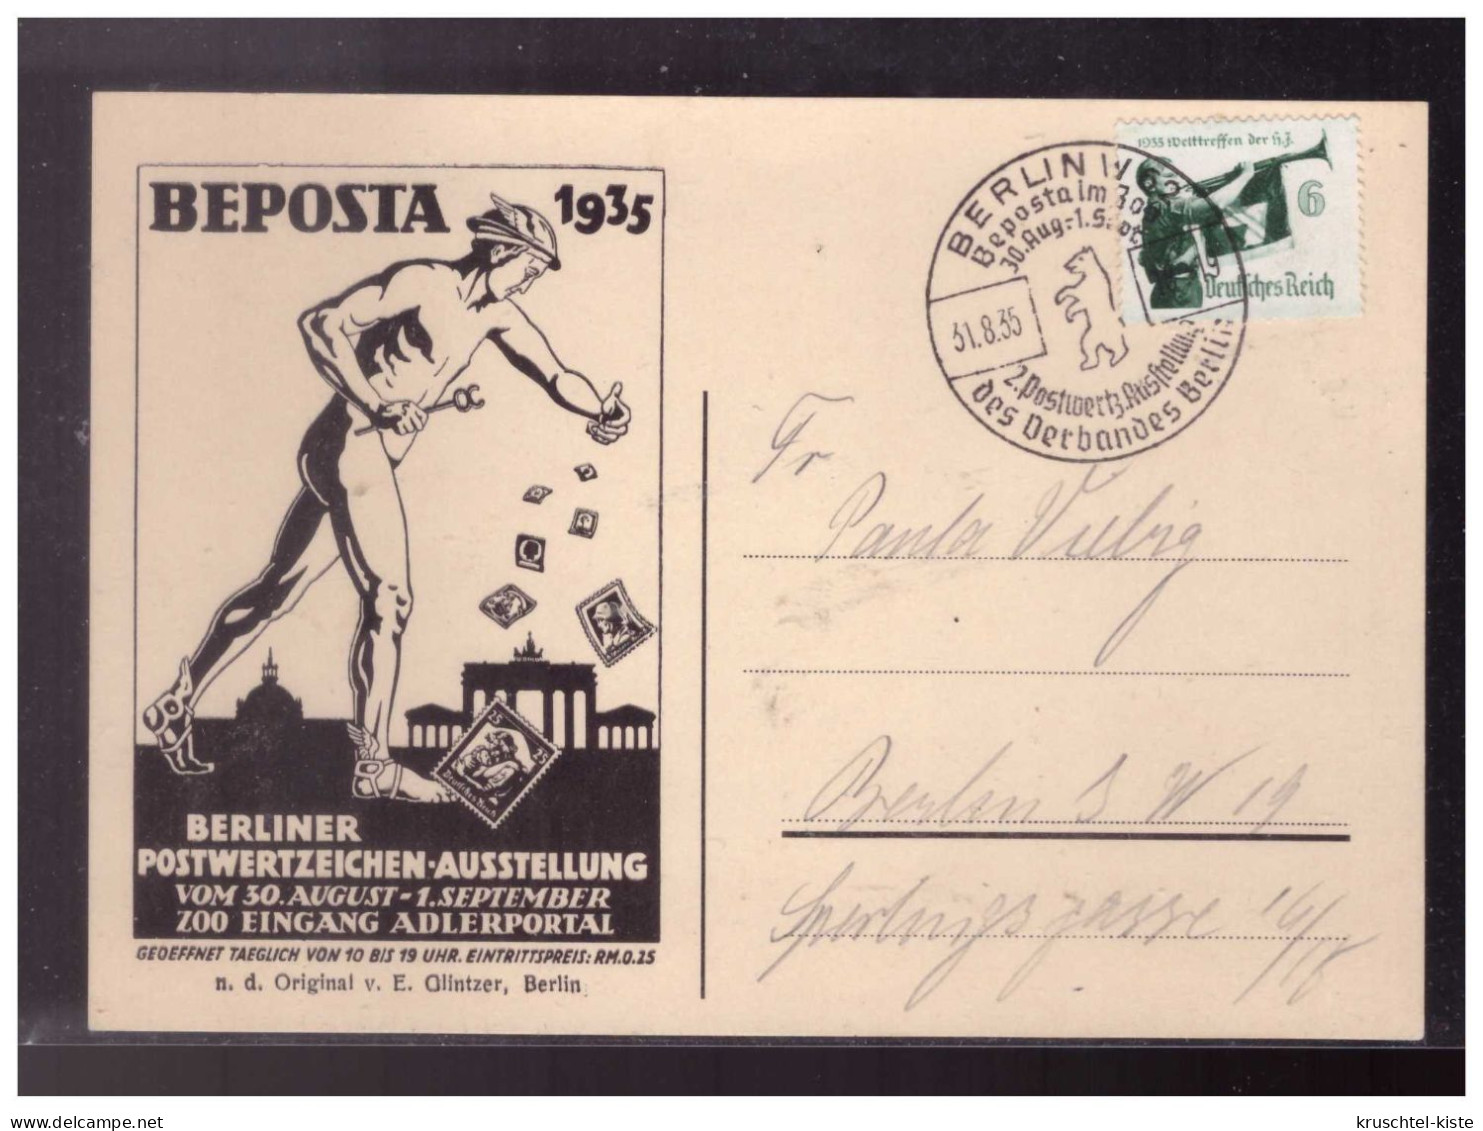 DT- Reich (024193) Postkarte Beposta 1935, Berliner Postwert-Ausstellung, Gelaufen Berlin 31.8.1935 - Covers & Documents